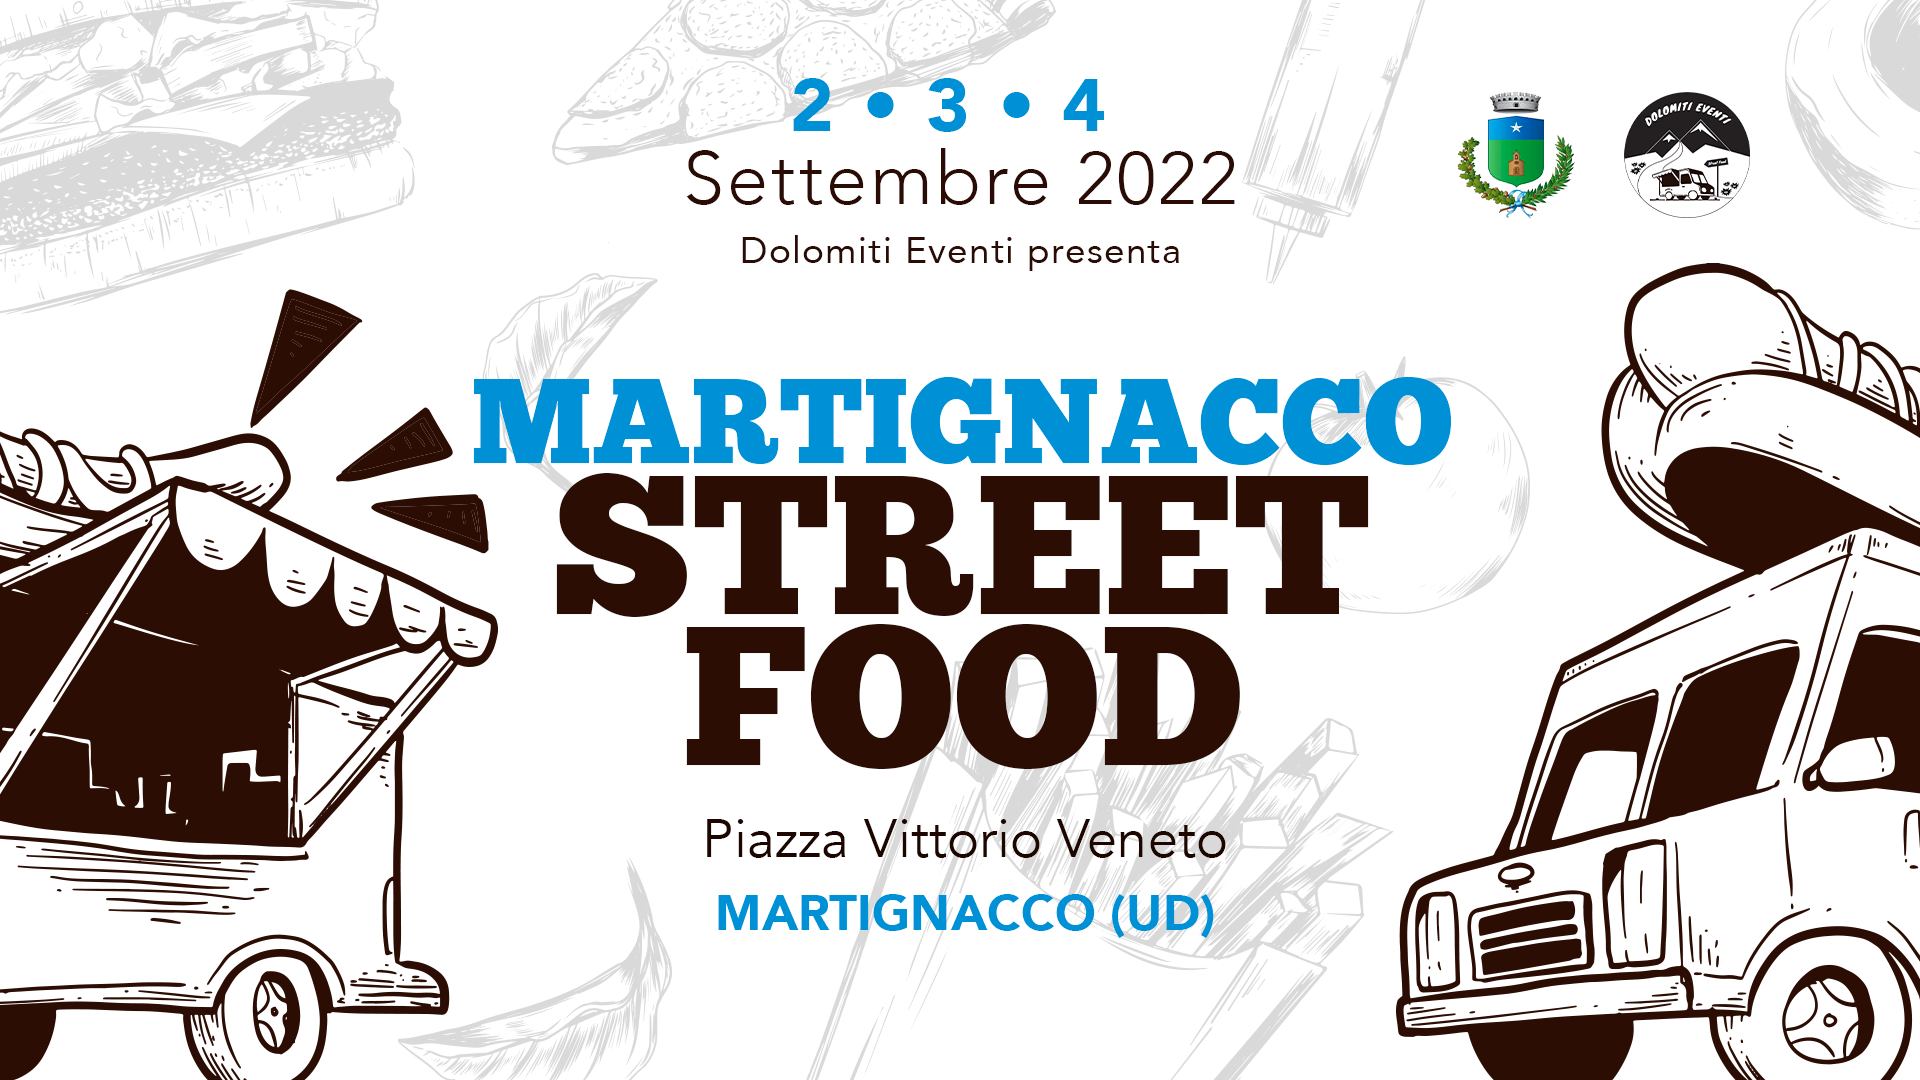 Martignacco Street Food, 2-3-4 Settembre 2022, Martignacco